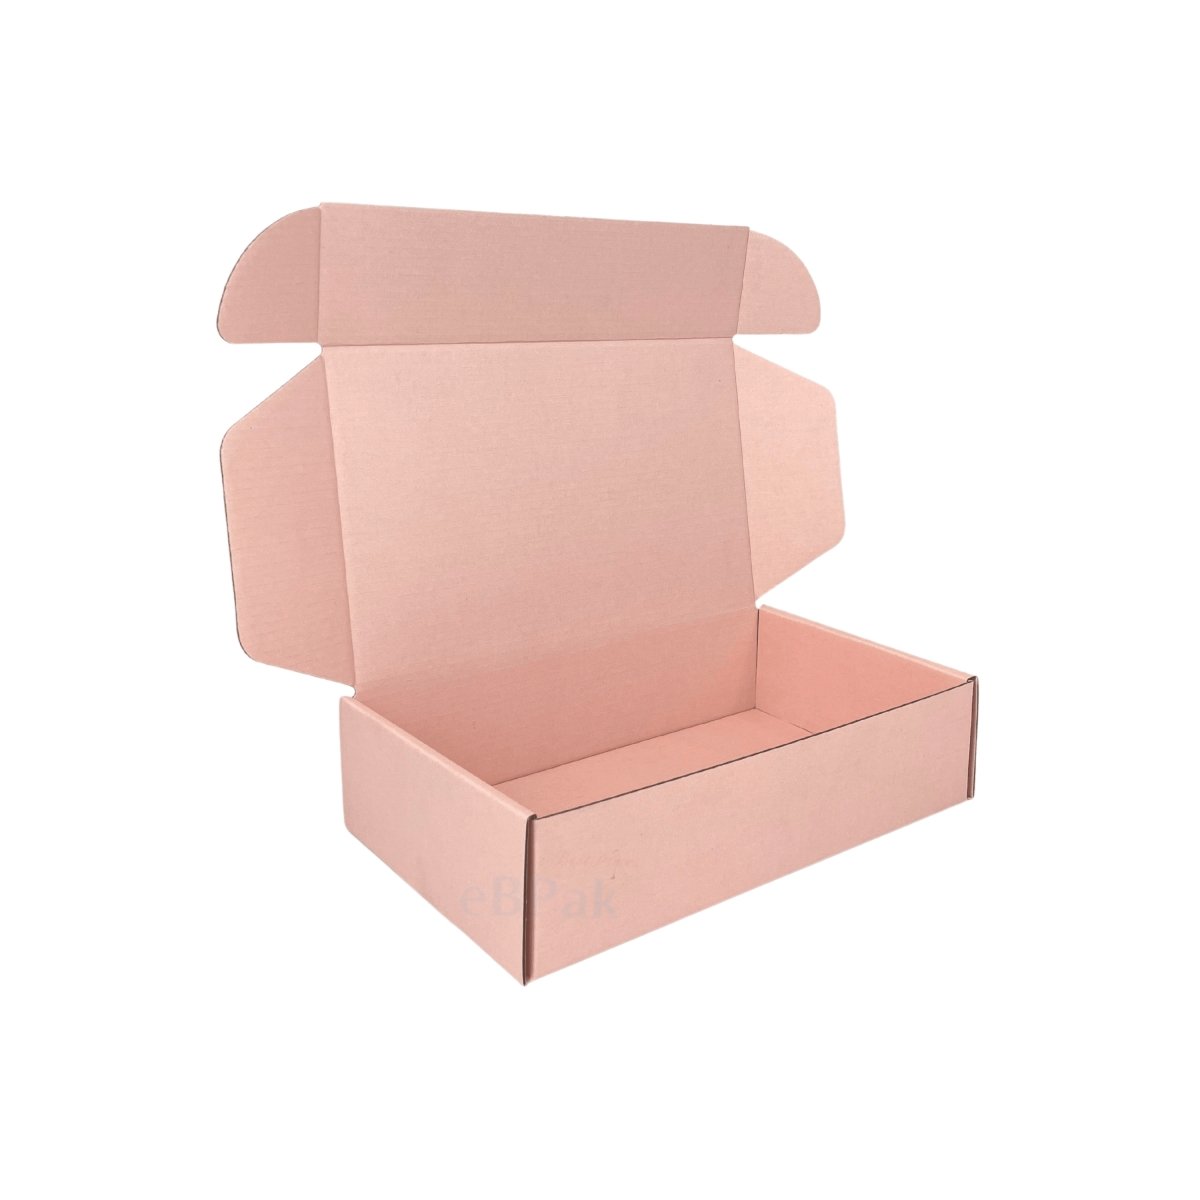 Premium Full Rose Pink Mailing Box 240 x 150 x 60mm B358